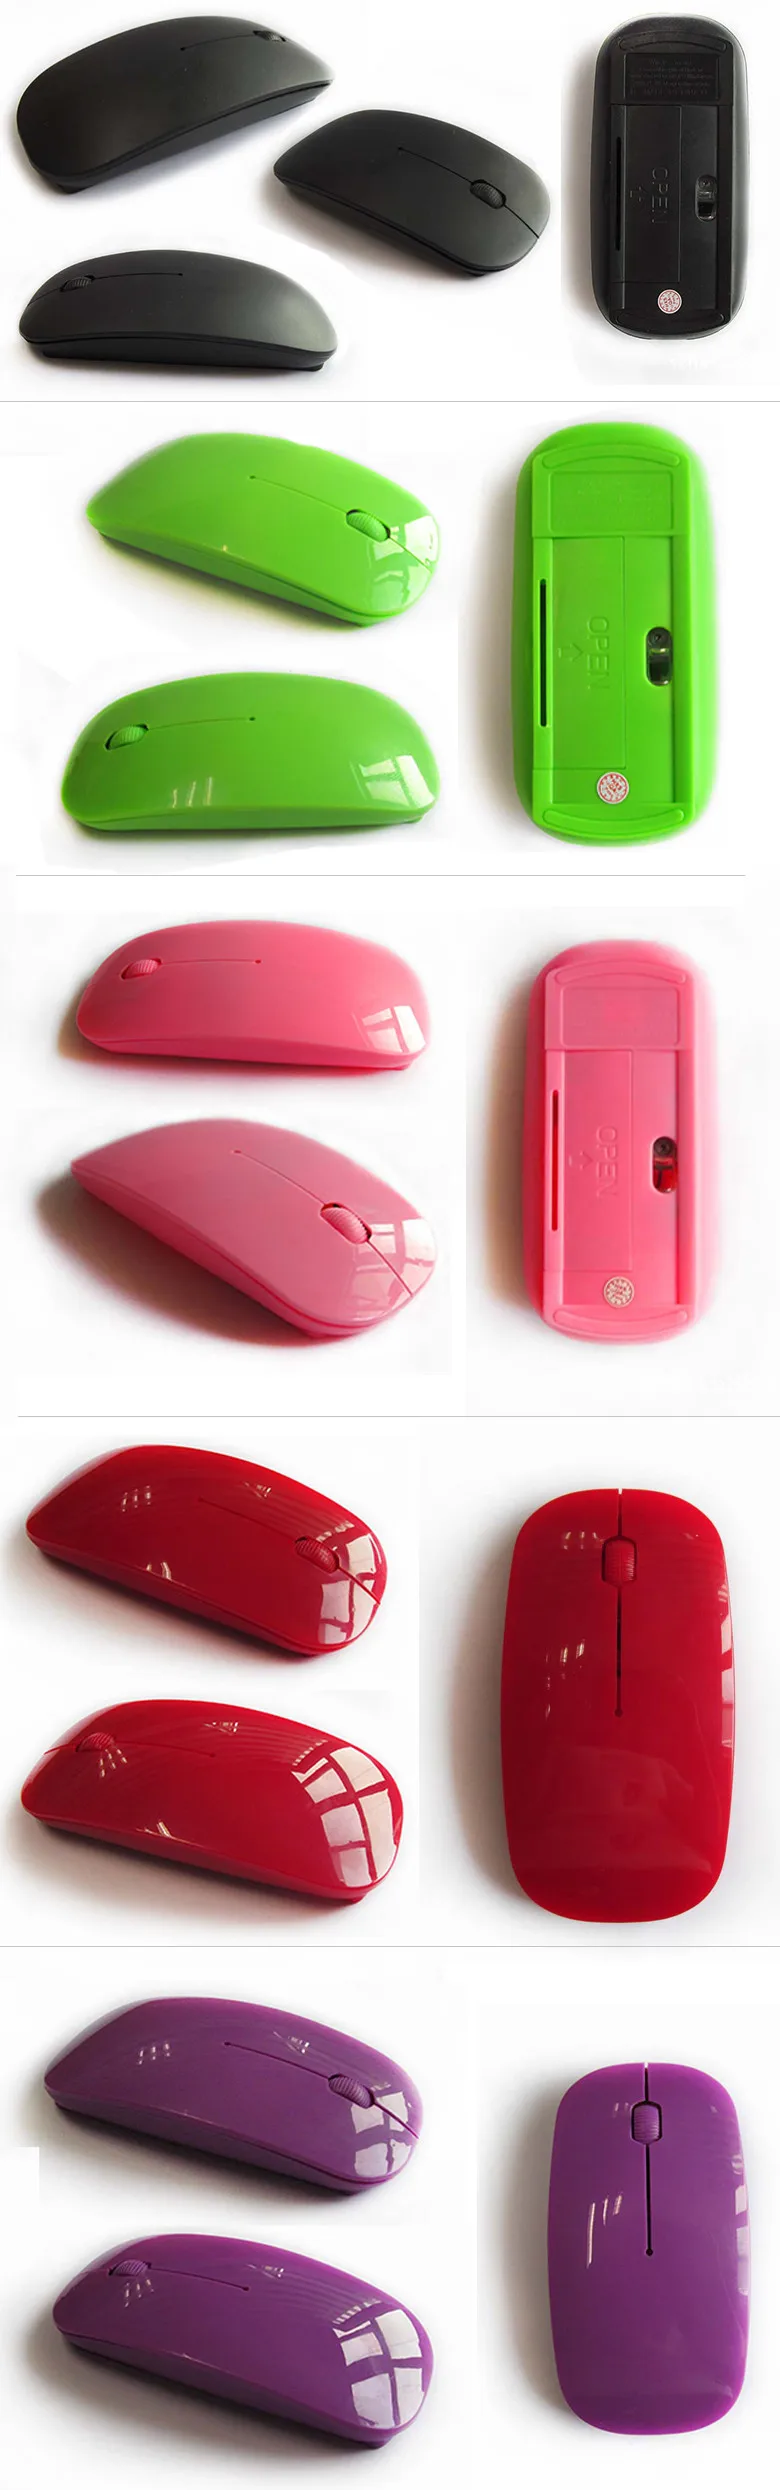 2.4gh wireless mouse.jpg